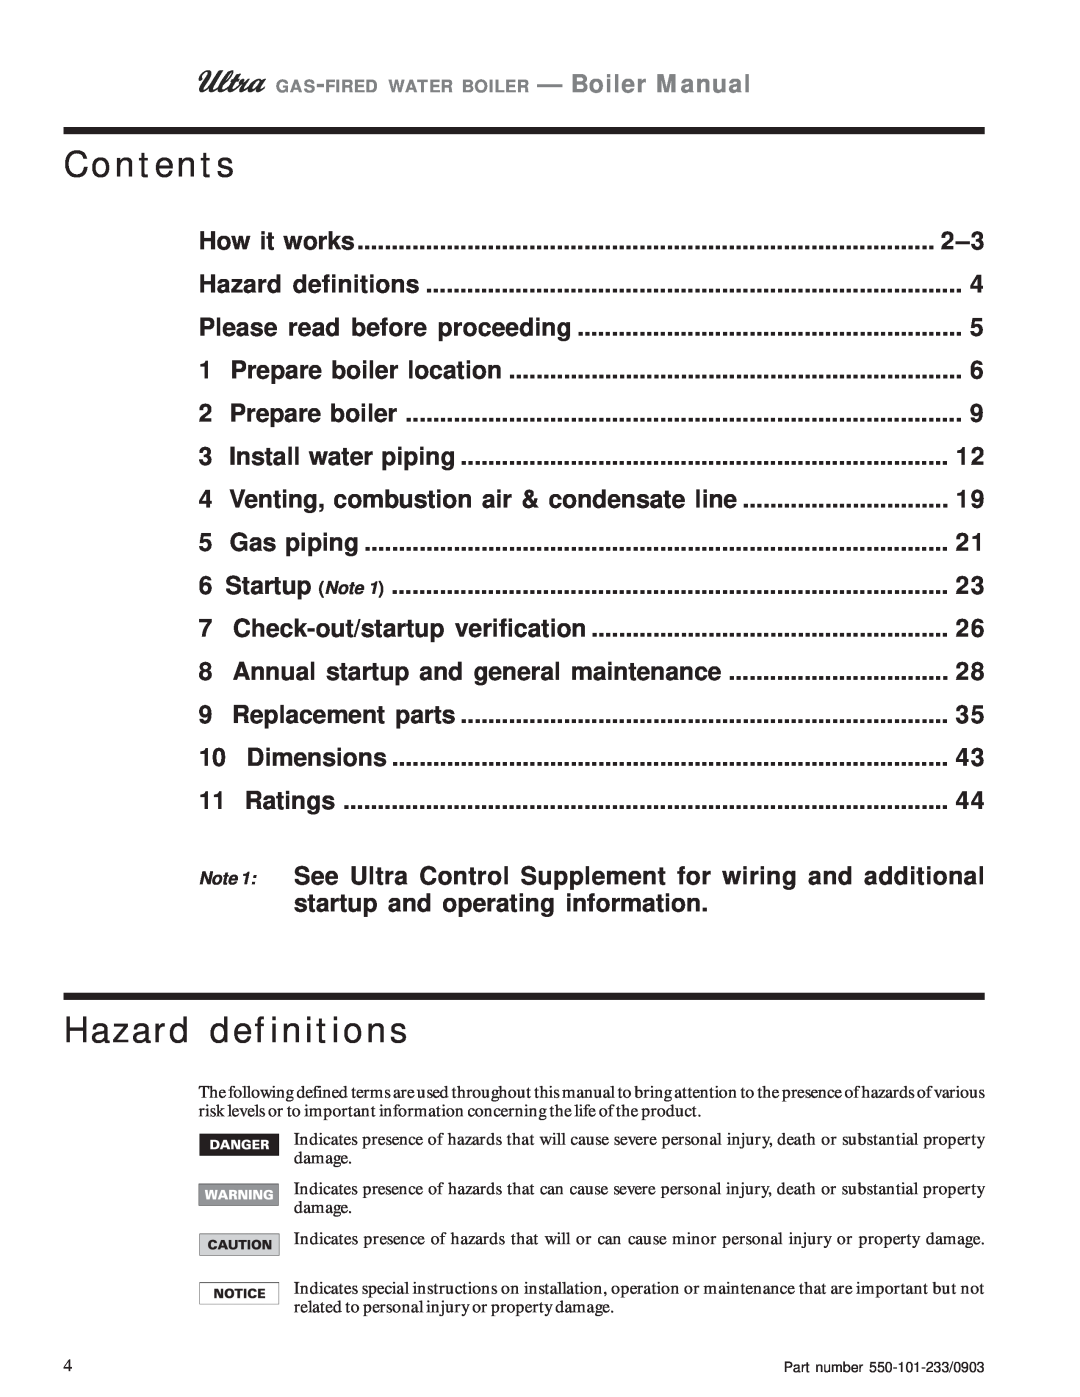 Weil-McLain 155, 80, 230, 310, 105 manual Contents, Hazard definitions 